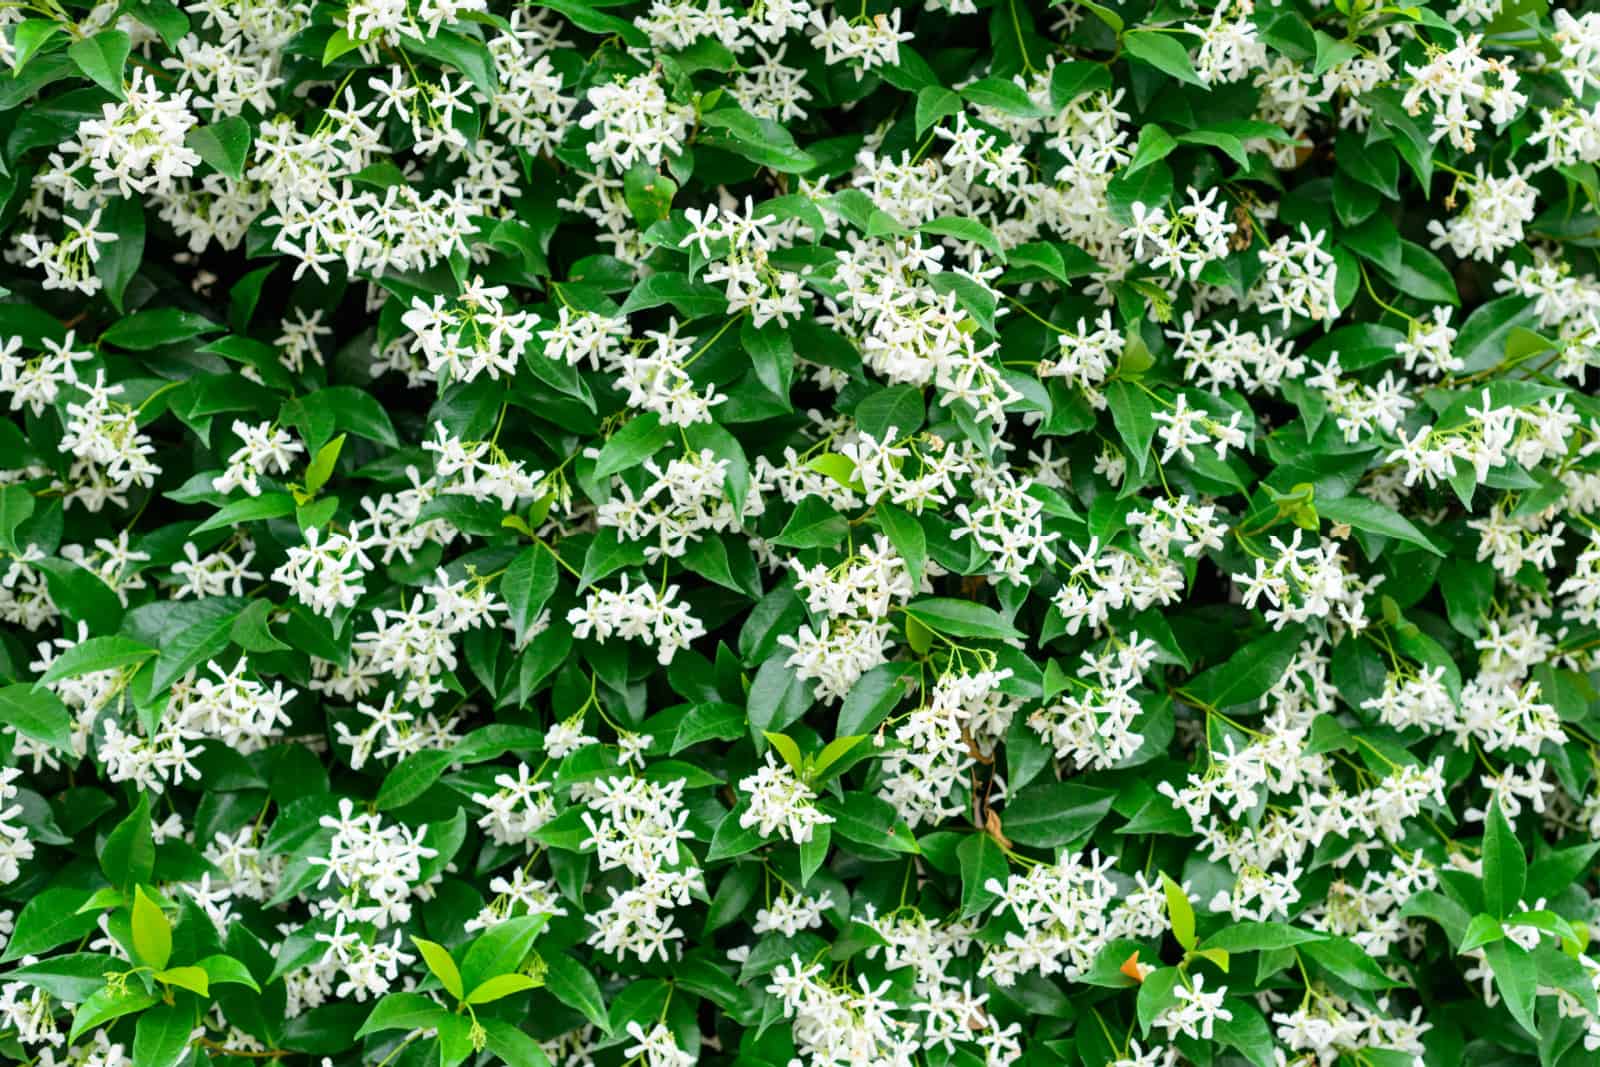 Wall of Chinese star jasmine flowers